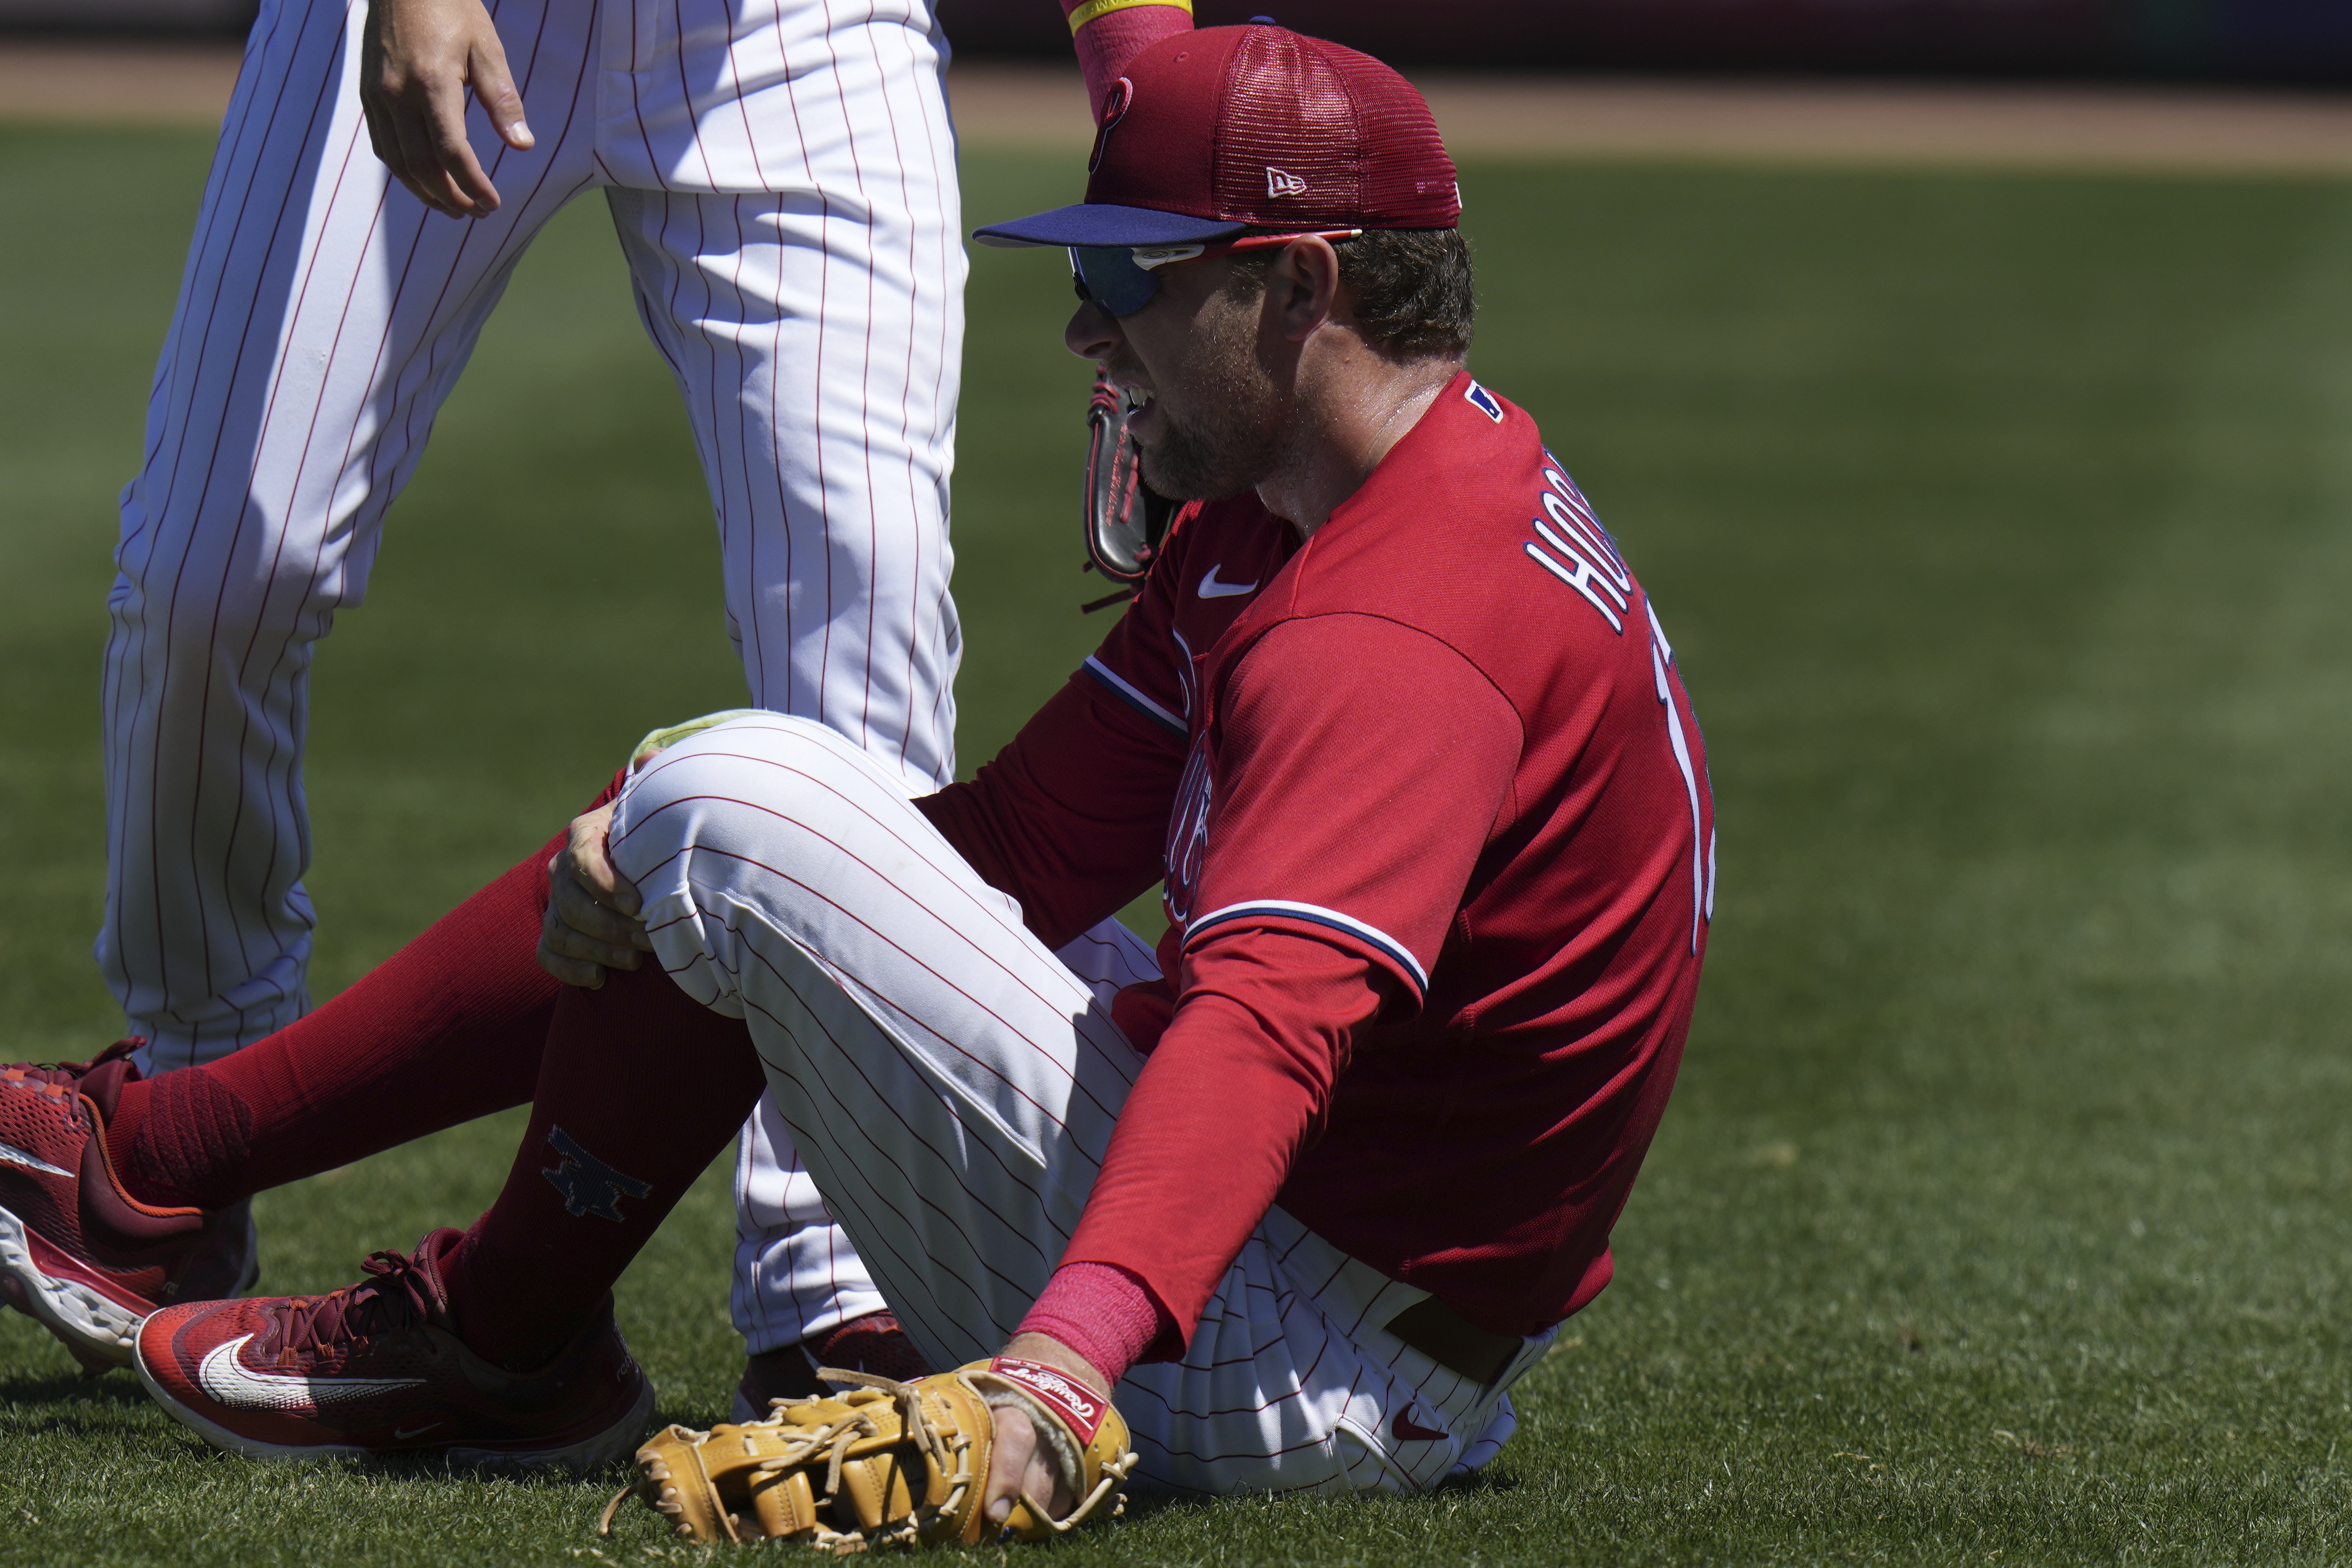 Phillies' injured first baseman Rhys Hoskins remains a long shot to